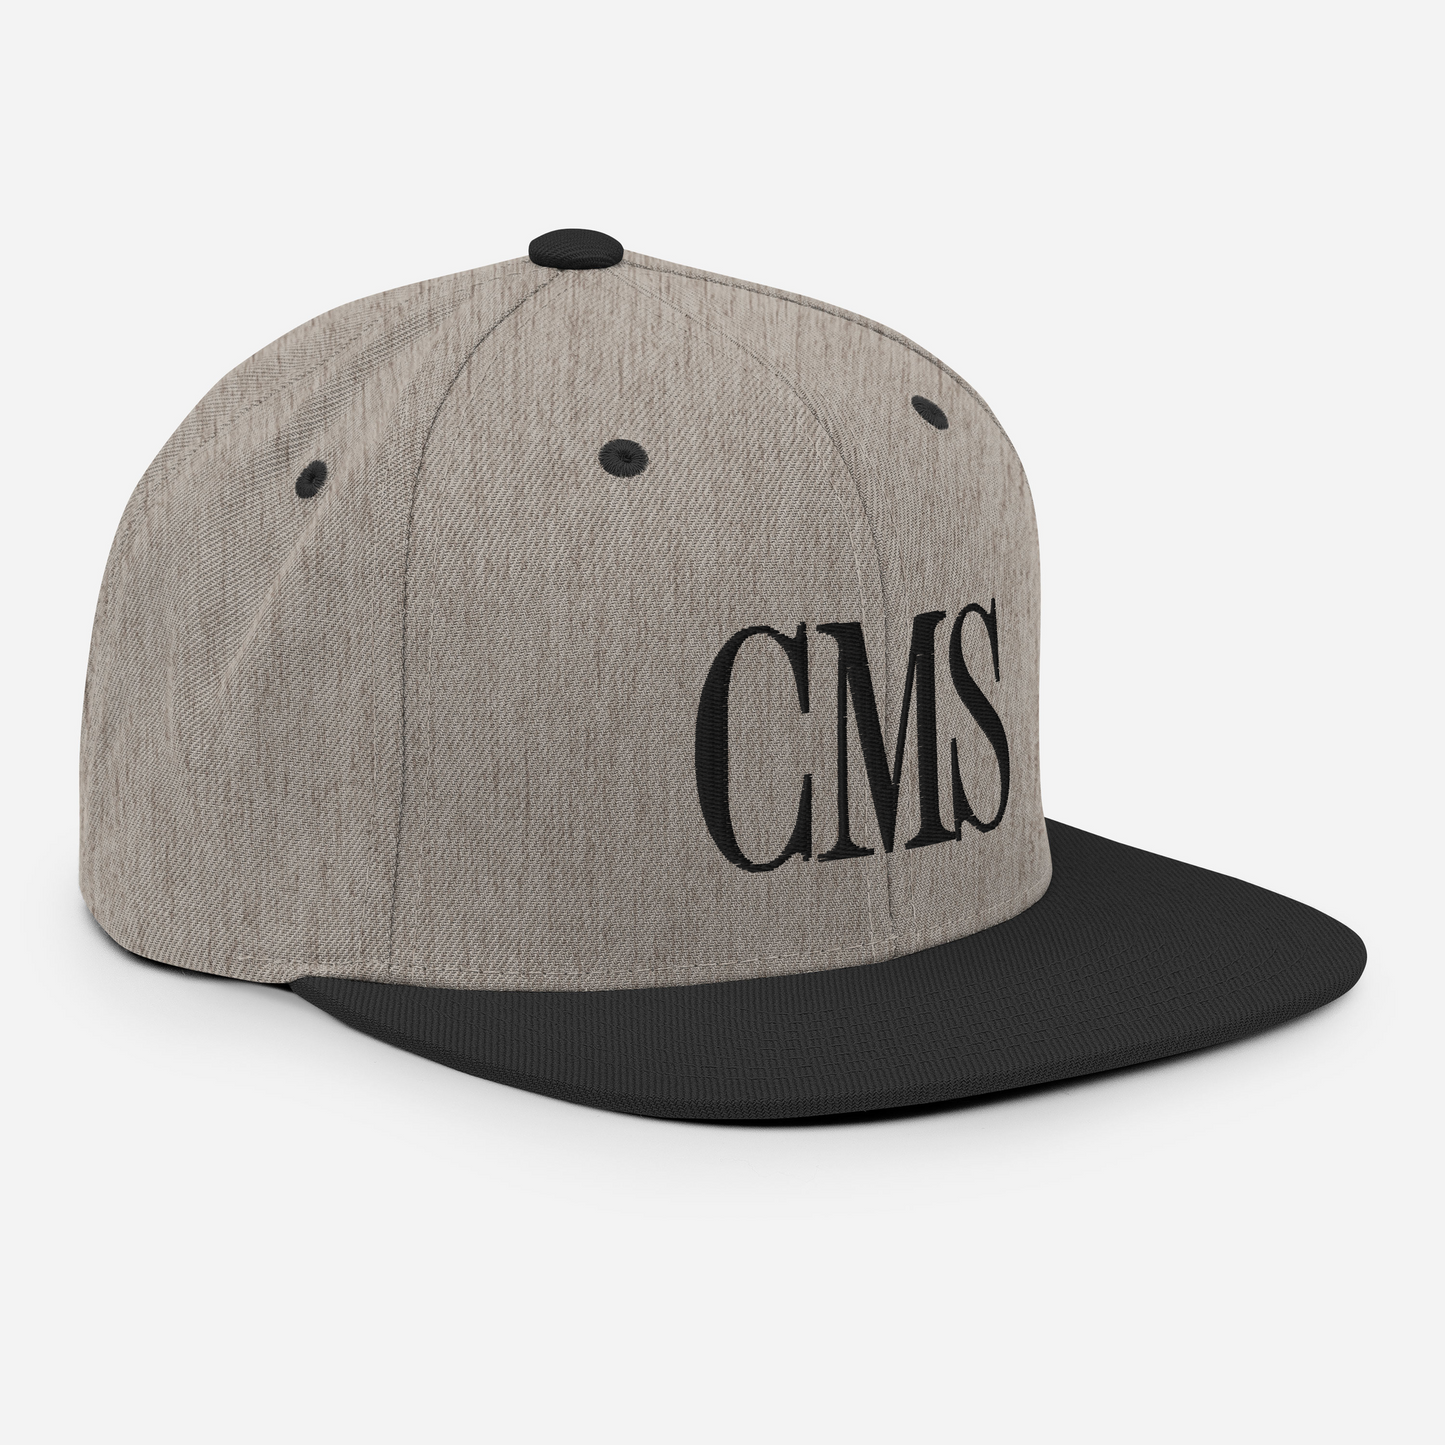 CMS Retro Snapback Hat